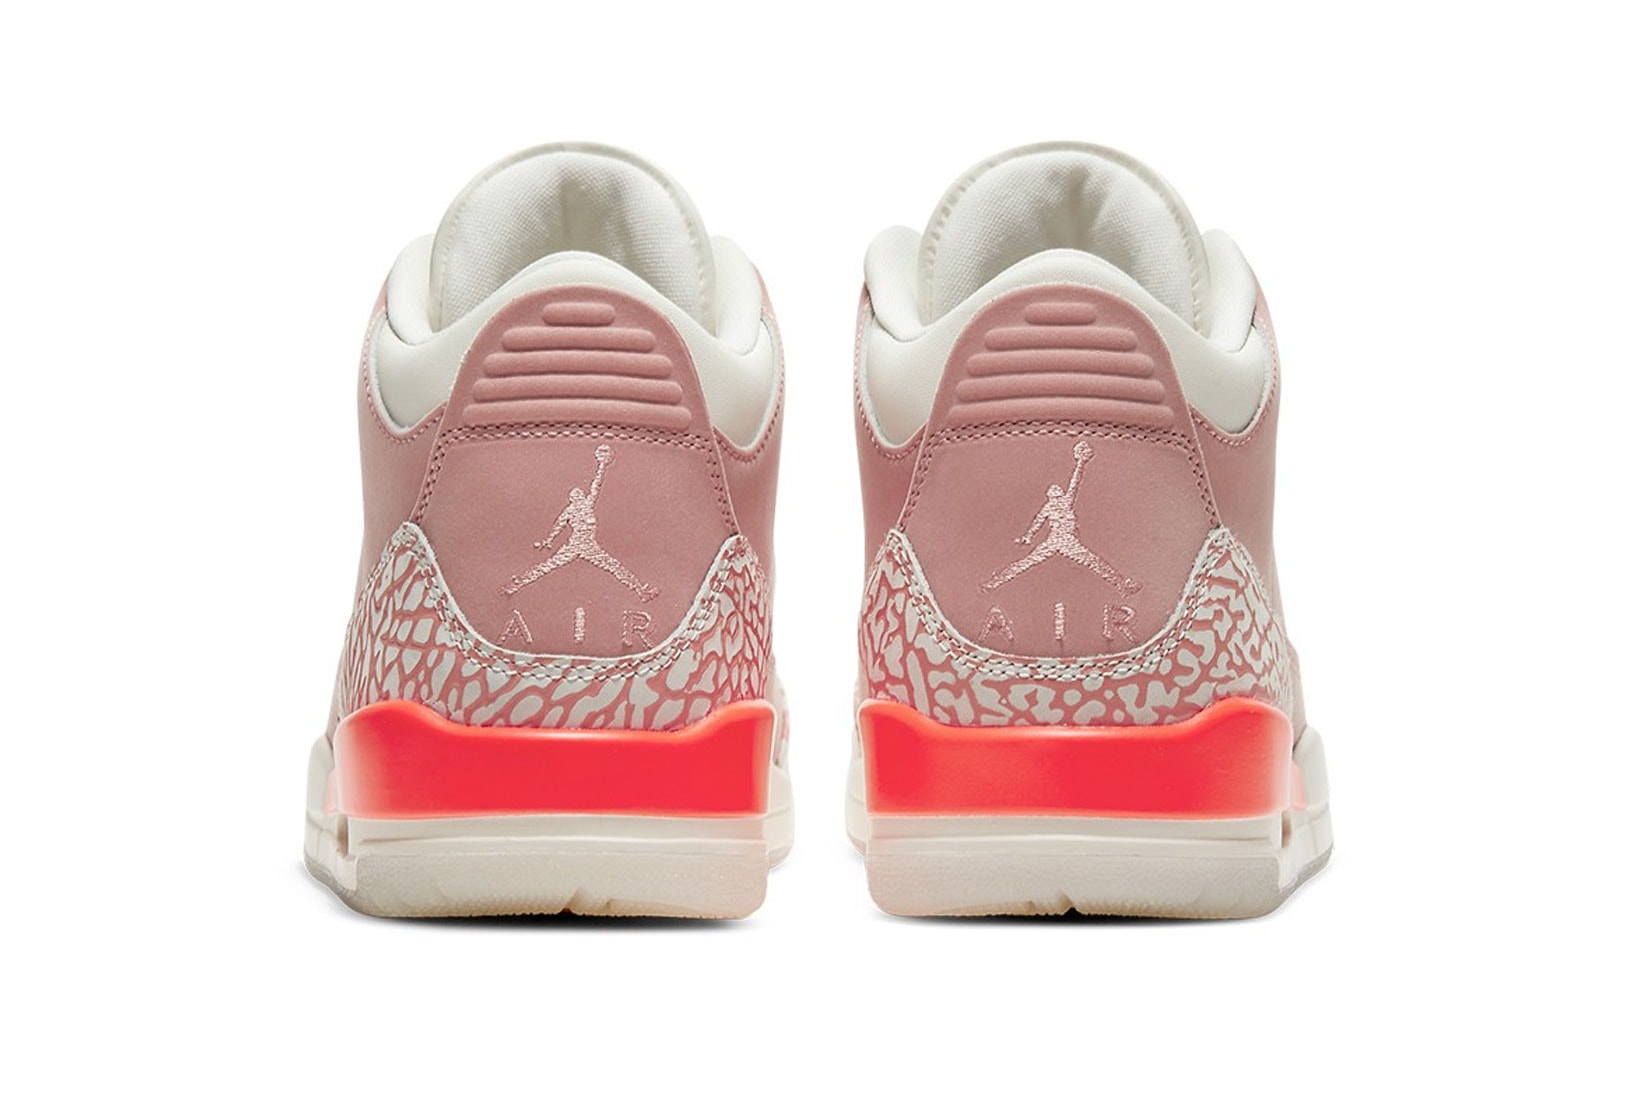 nike air jordan 3 aj3 rust pink womens sneakers heel back jumpman logo neon orange sail white